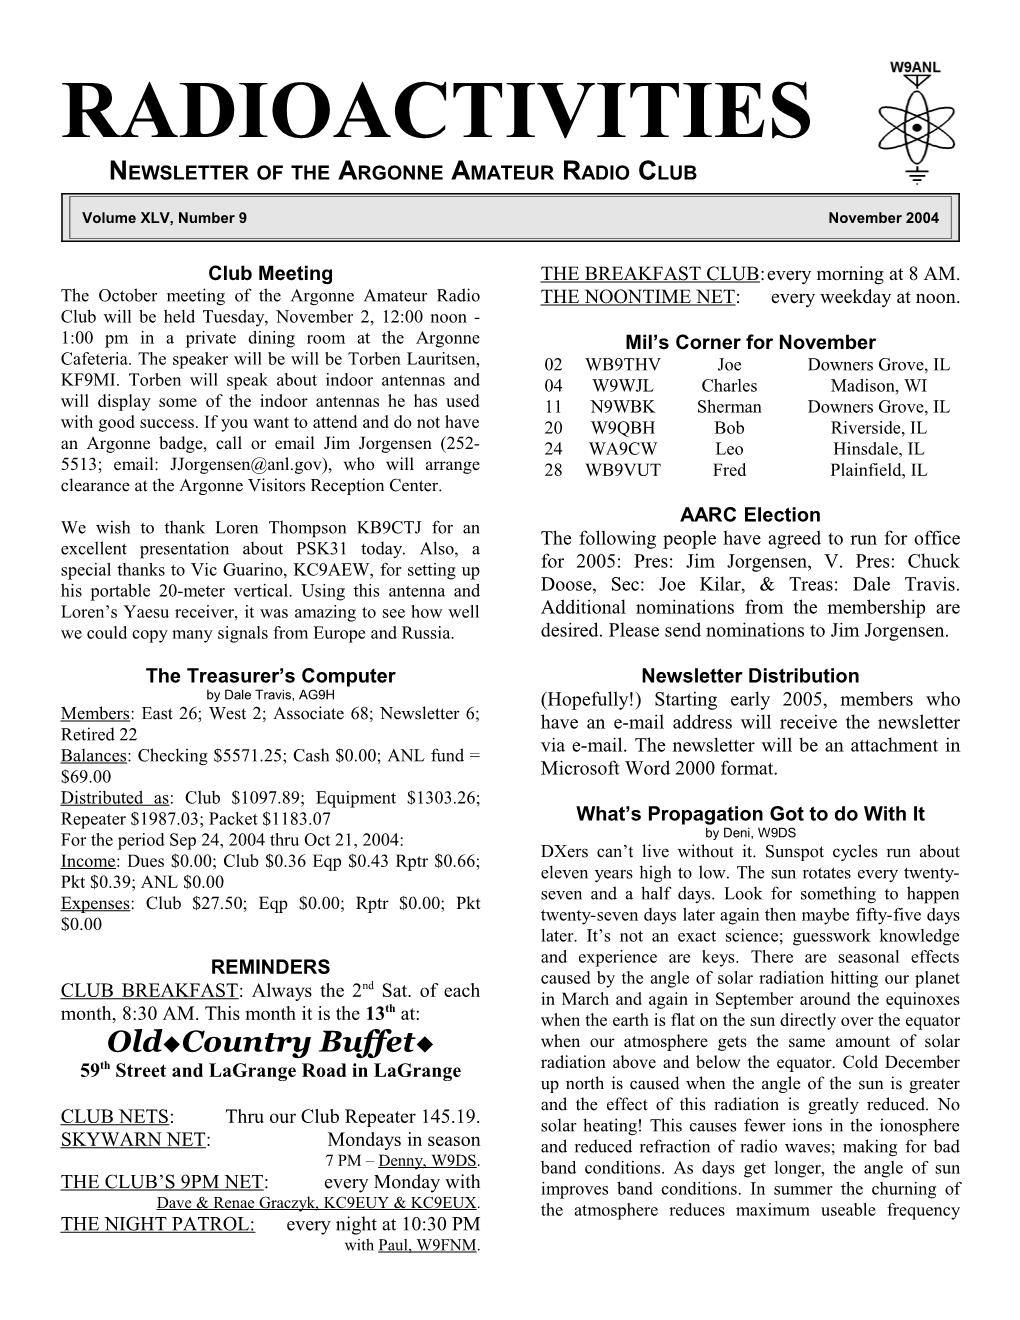 Newsletter of the Argonne Amateur Radio Club s4